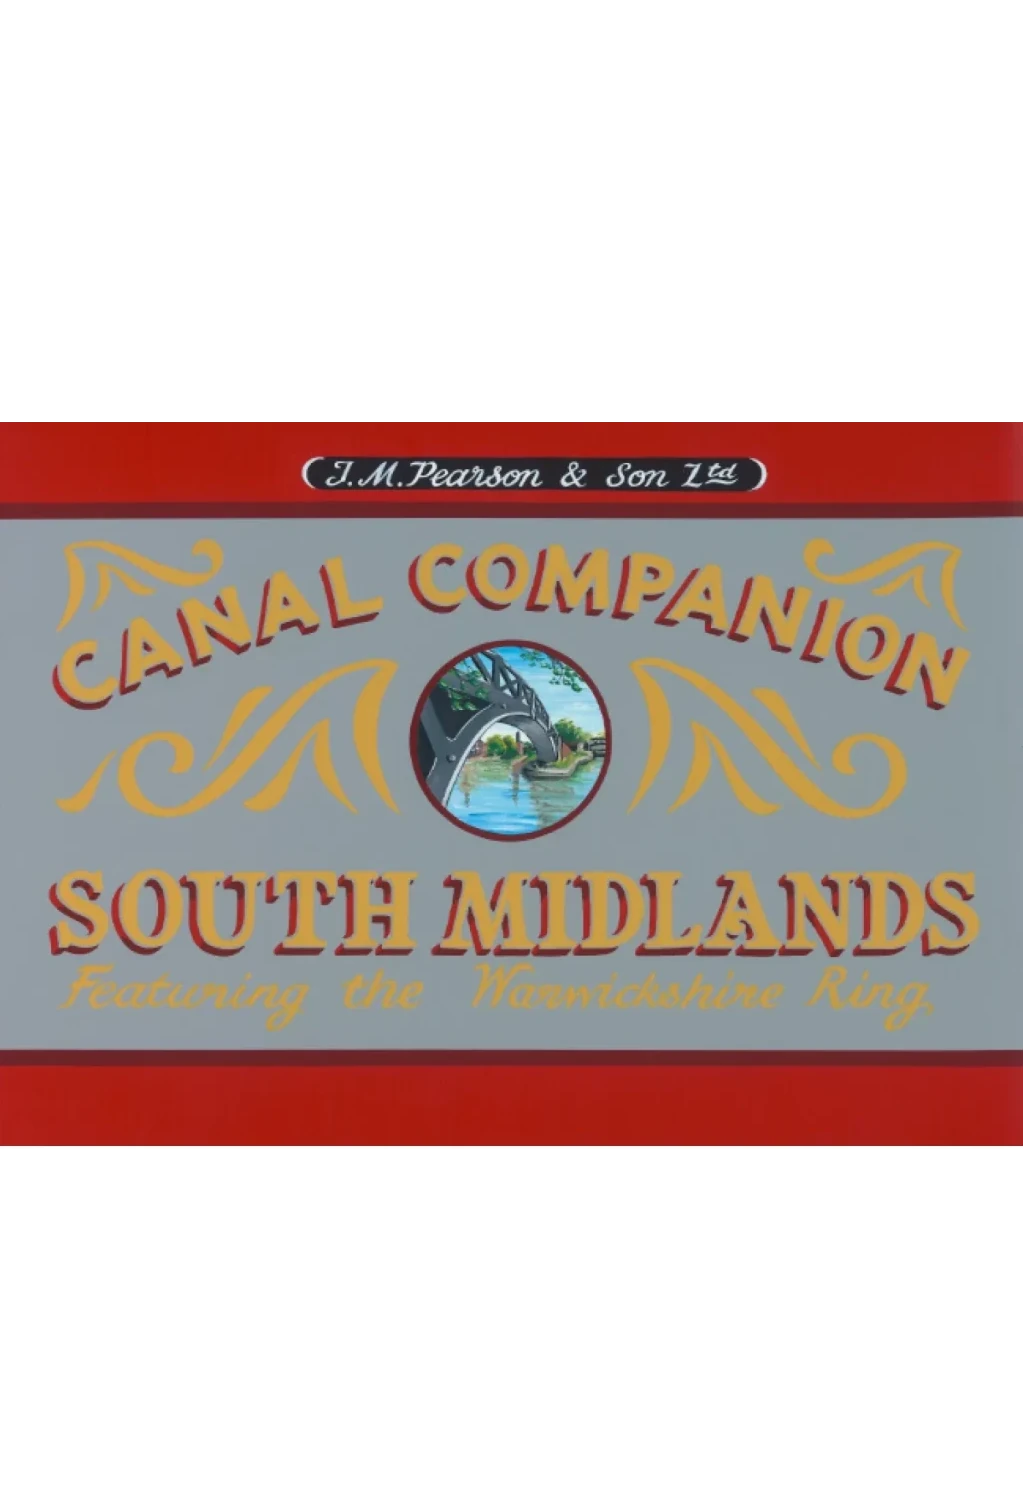 Pearson Canal Companion – South Midlands